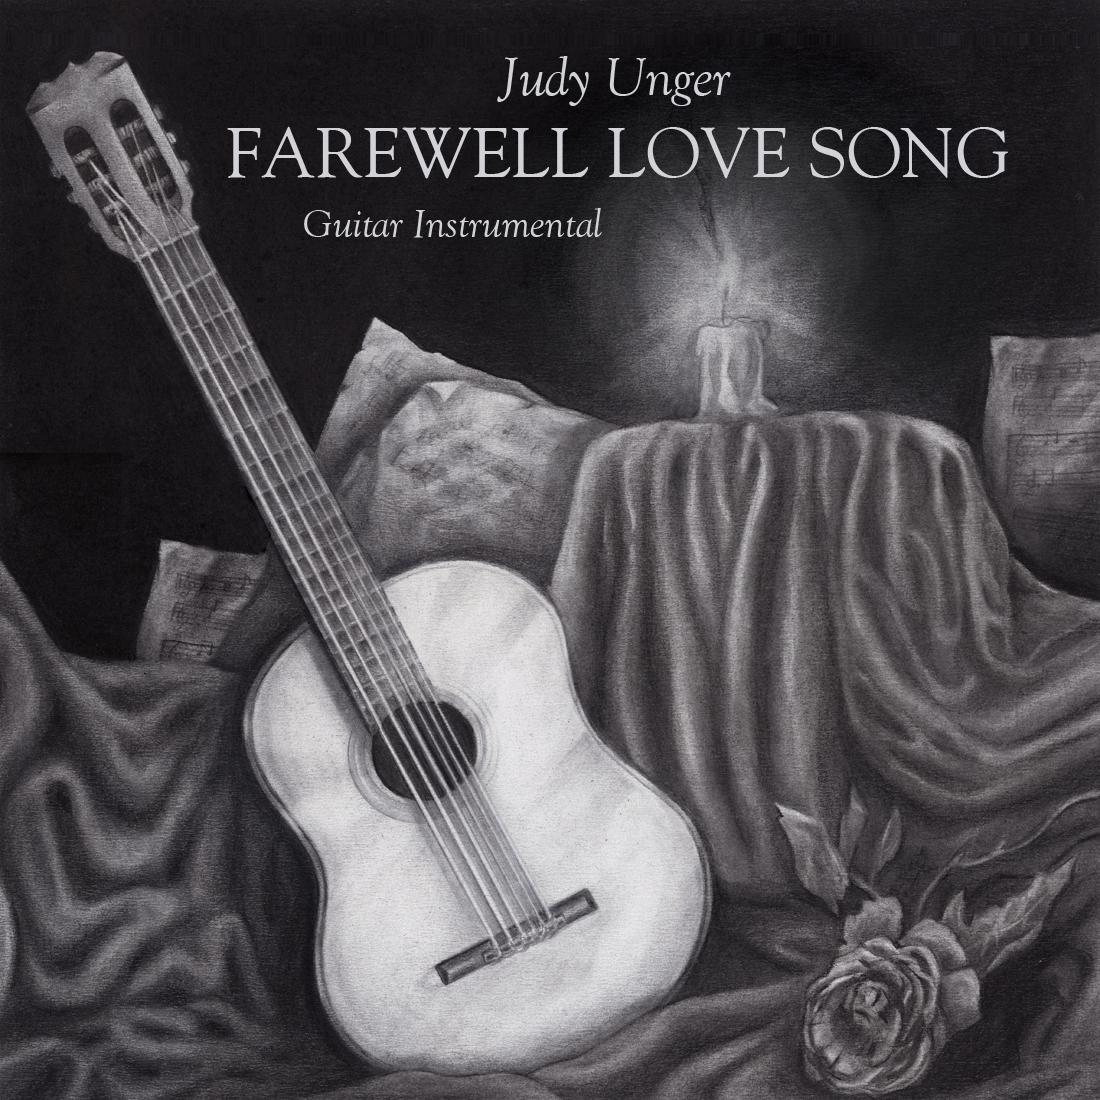 Farewell Love Song Guitar Instrumental